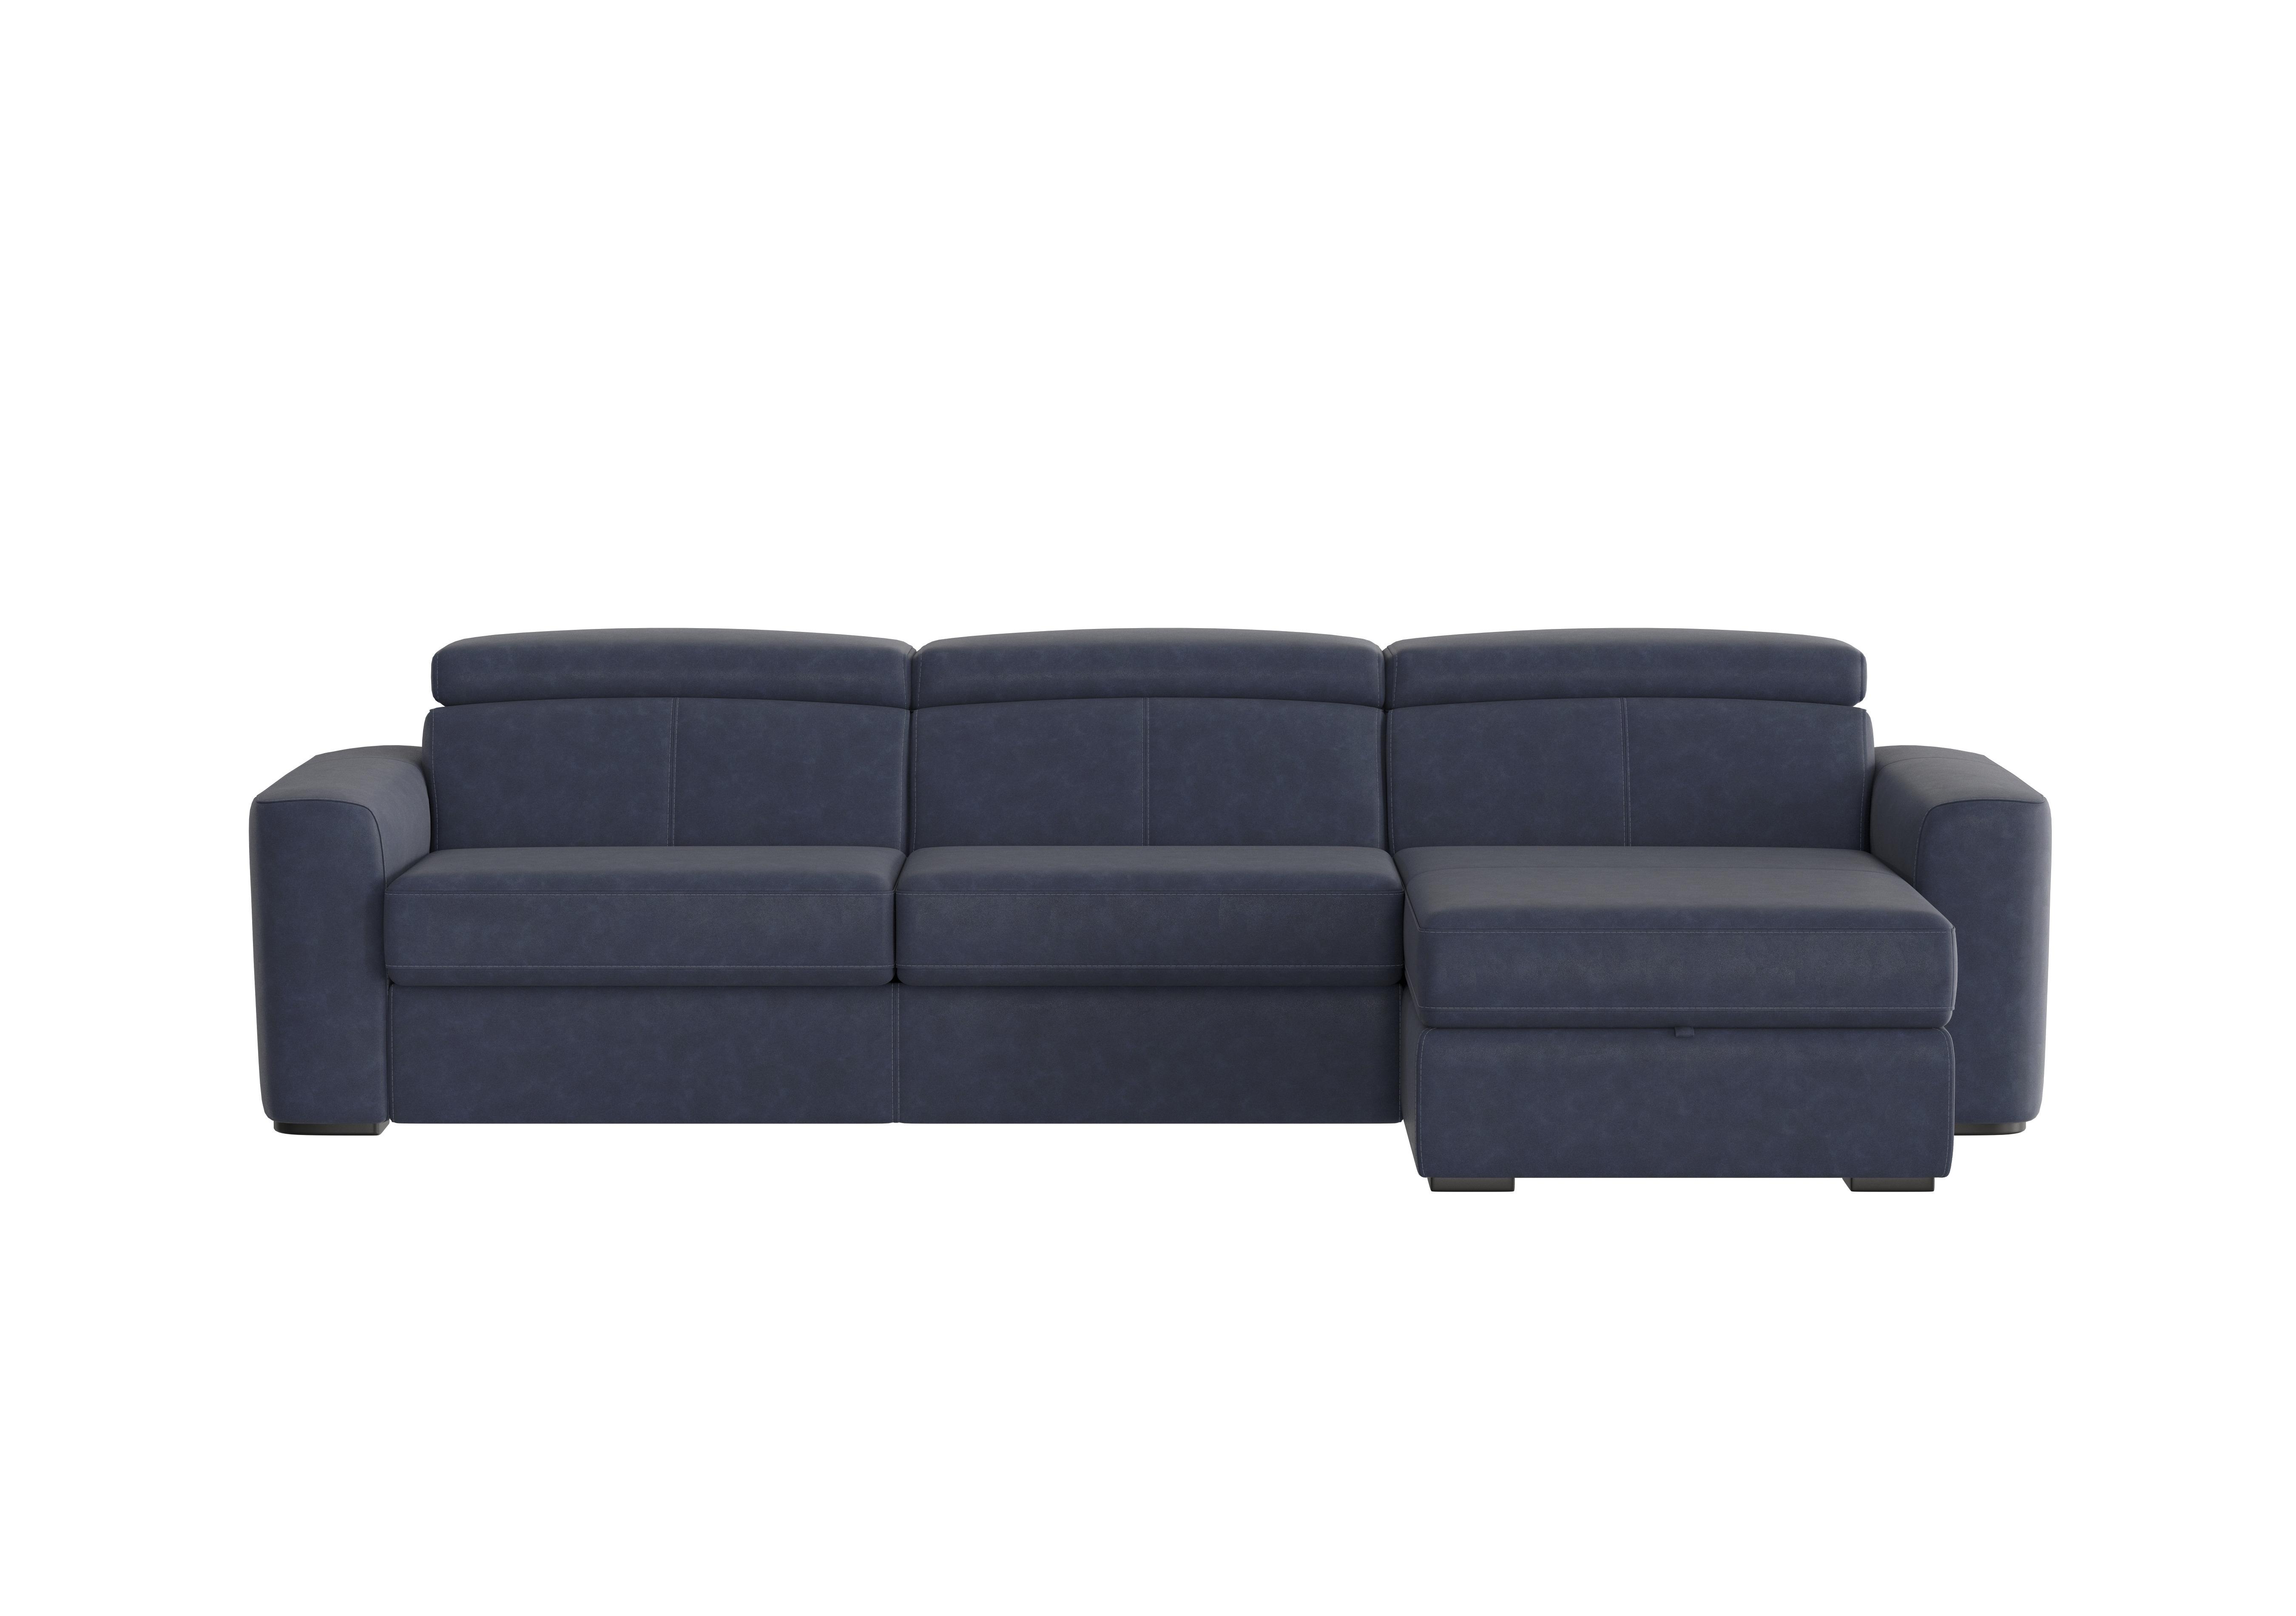 Infinity Fabric Corner Chaise Sofa with Storage in Bfa-Ori-R23 Blue on Furniture Village